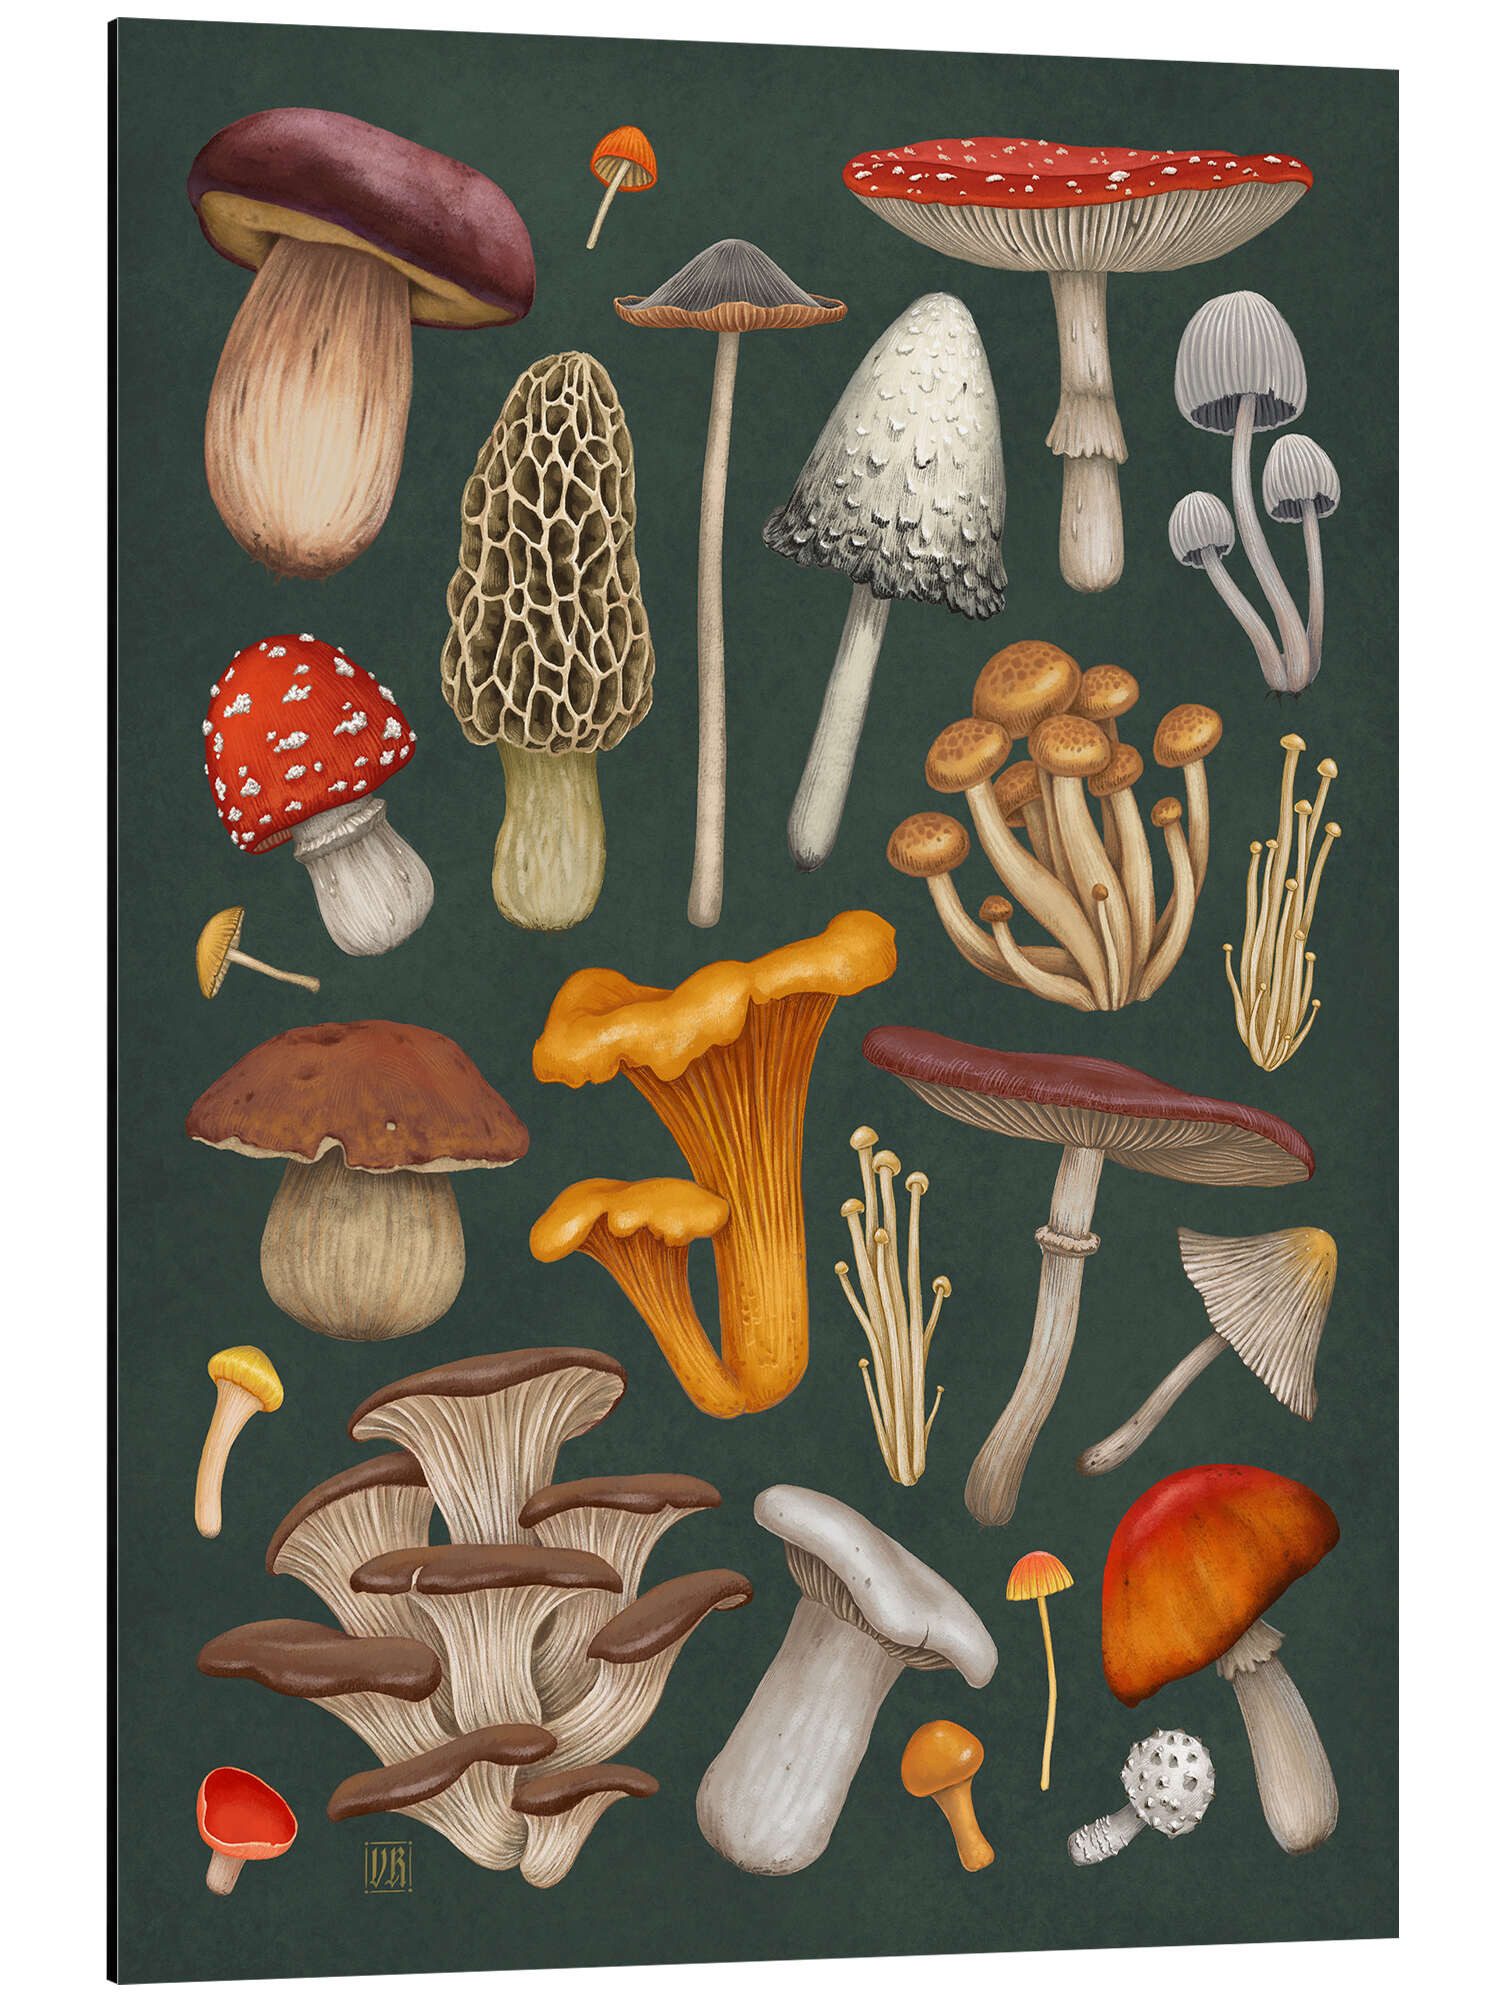 Posterlounge Alu-Dibond-Druck Vasilisa Romanenko, Pilze, Wohnzimmer Natürlichkeit Illustration